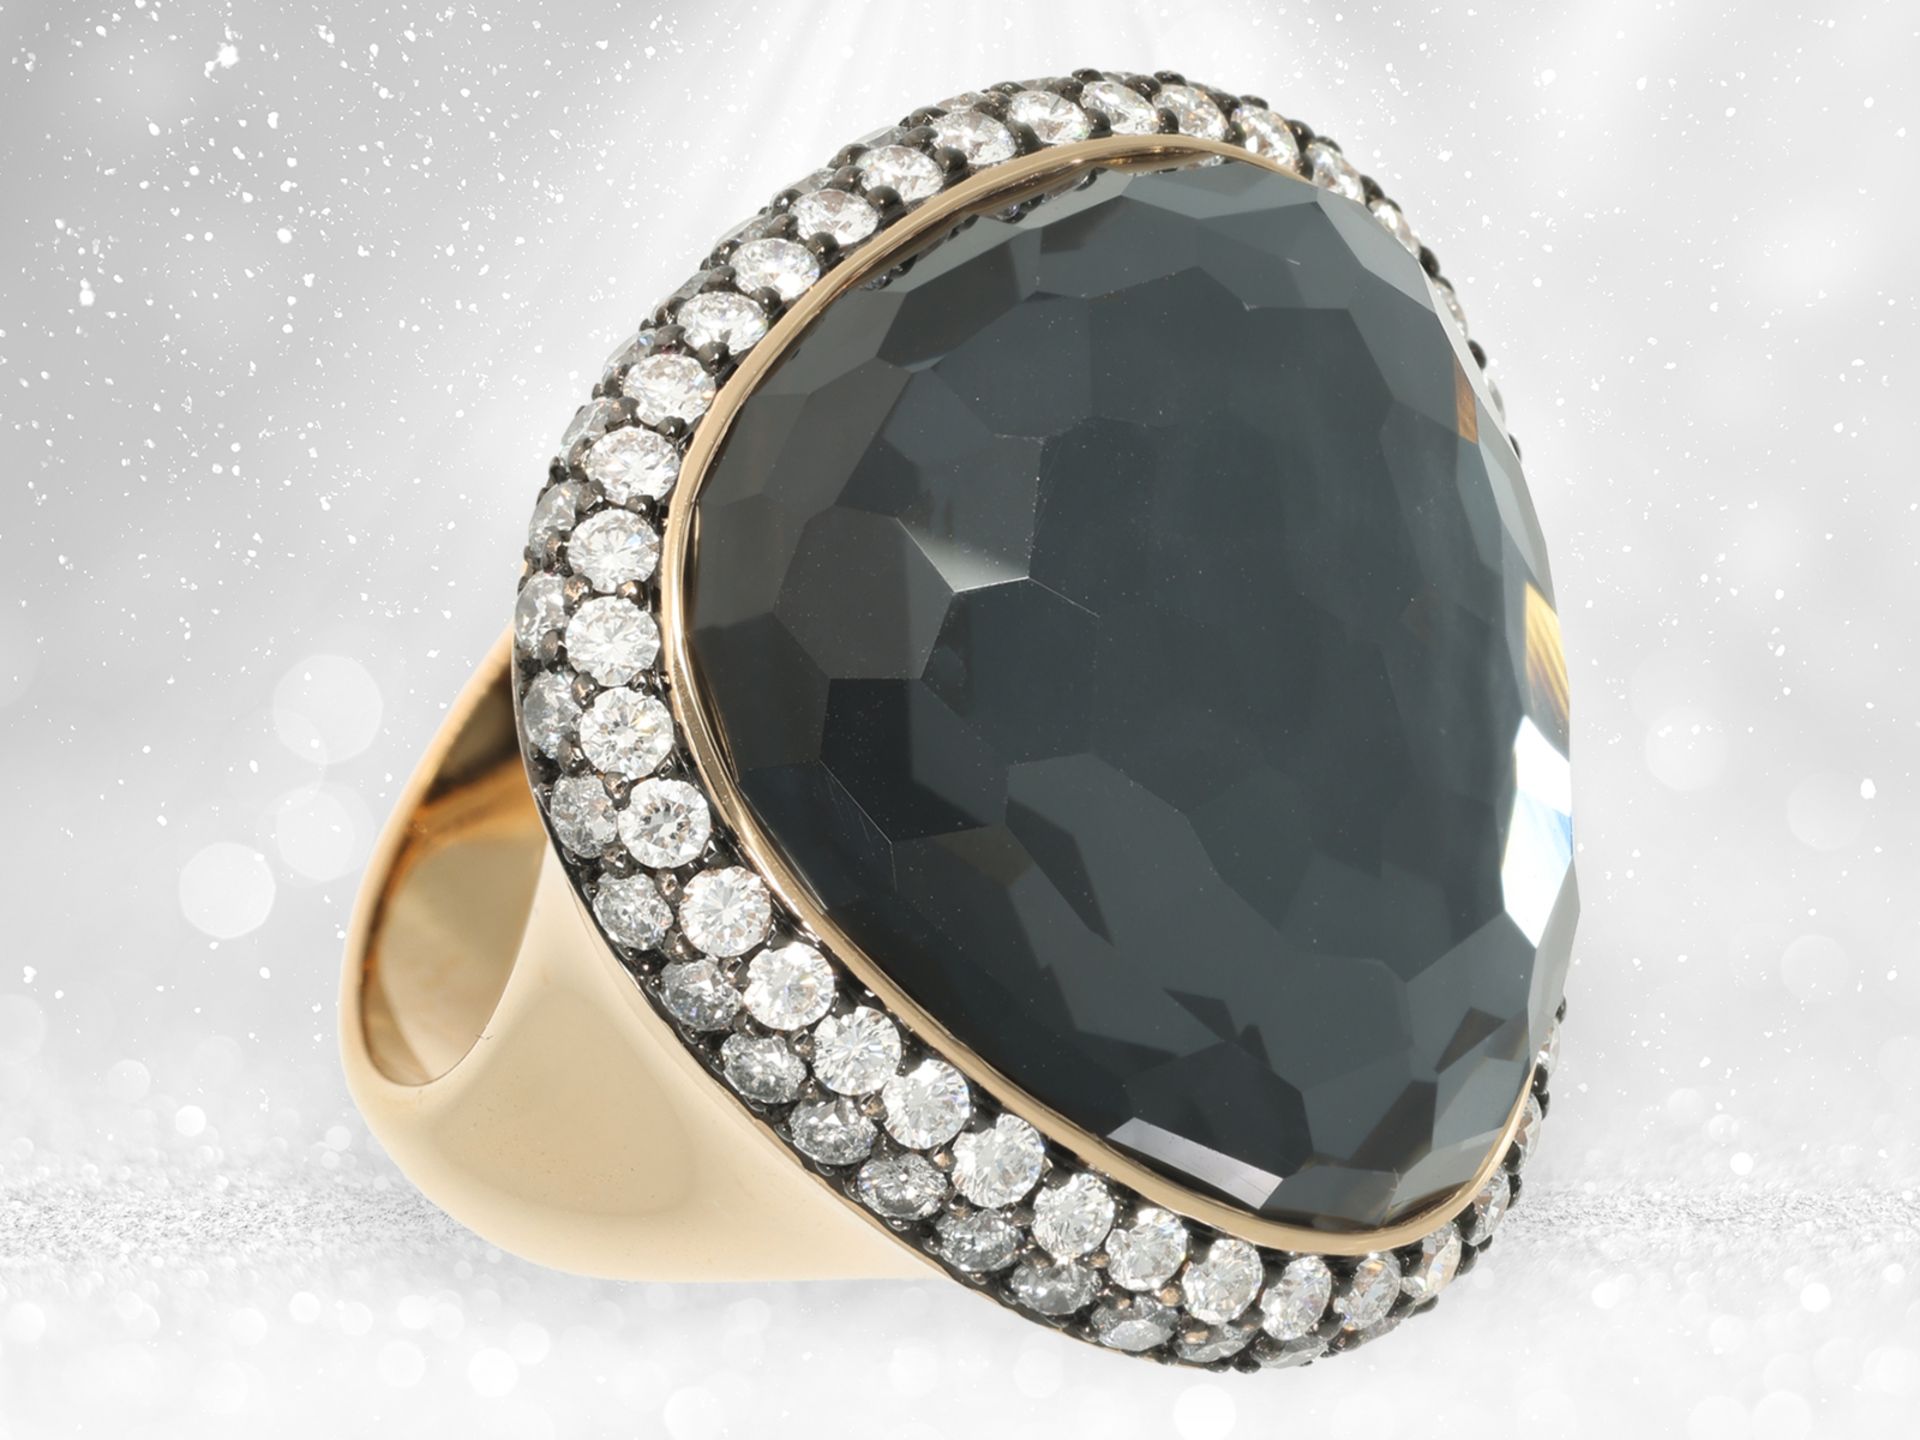 Expensive designer cocktail ring with abundant brilliant-cut diamonds and a quartz, handmade Brahmfe - Image 5 of 8